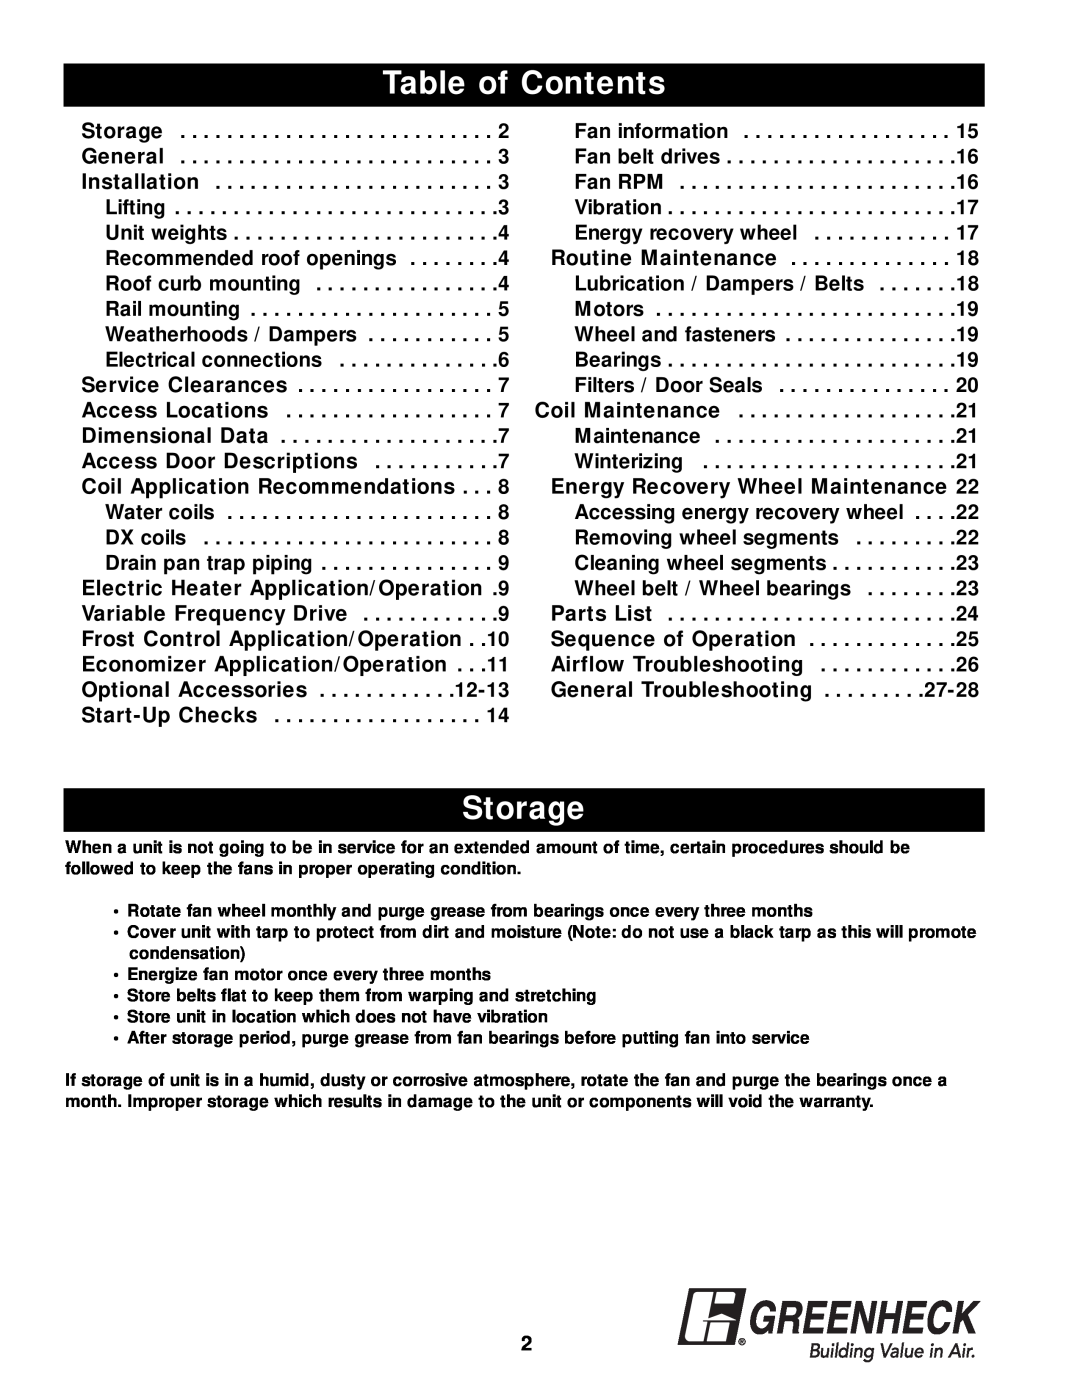 Greenheck Fan APEX-200 warranty Table of Contents, Storage, Access Door Descriptions, Coil Application Recommendations 